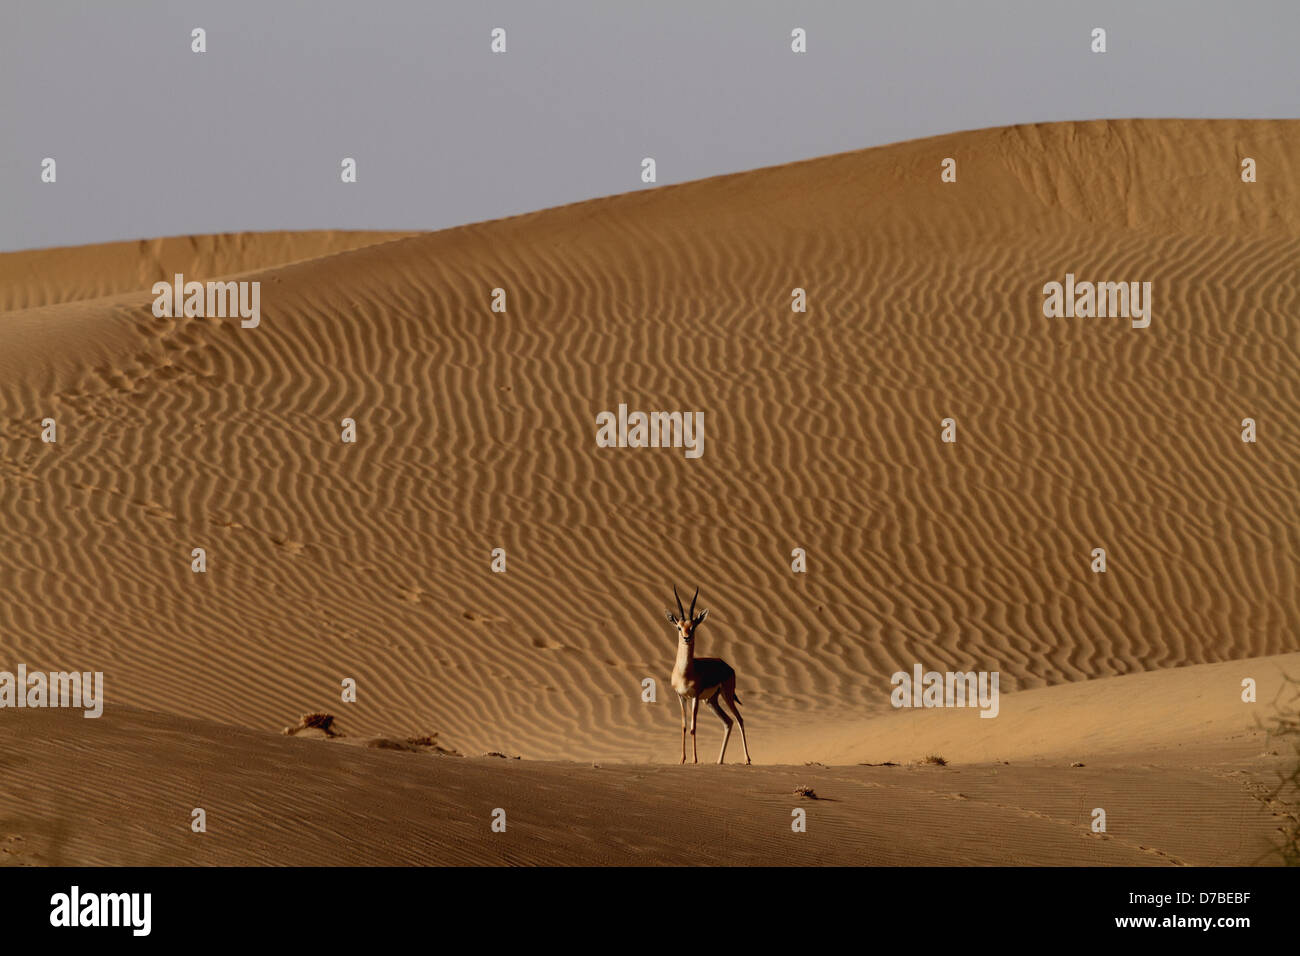 Gazelle in sand dune Stock Photo